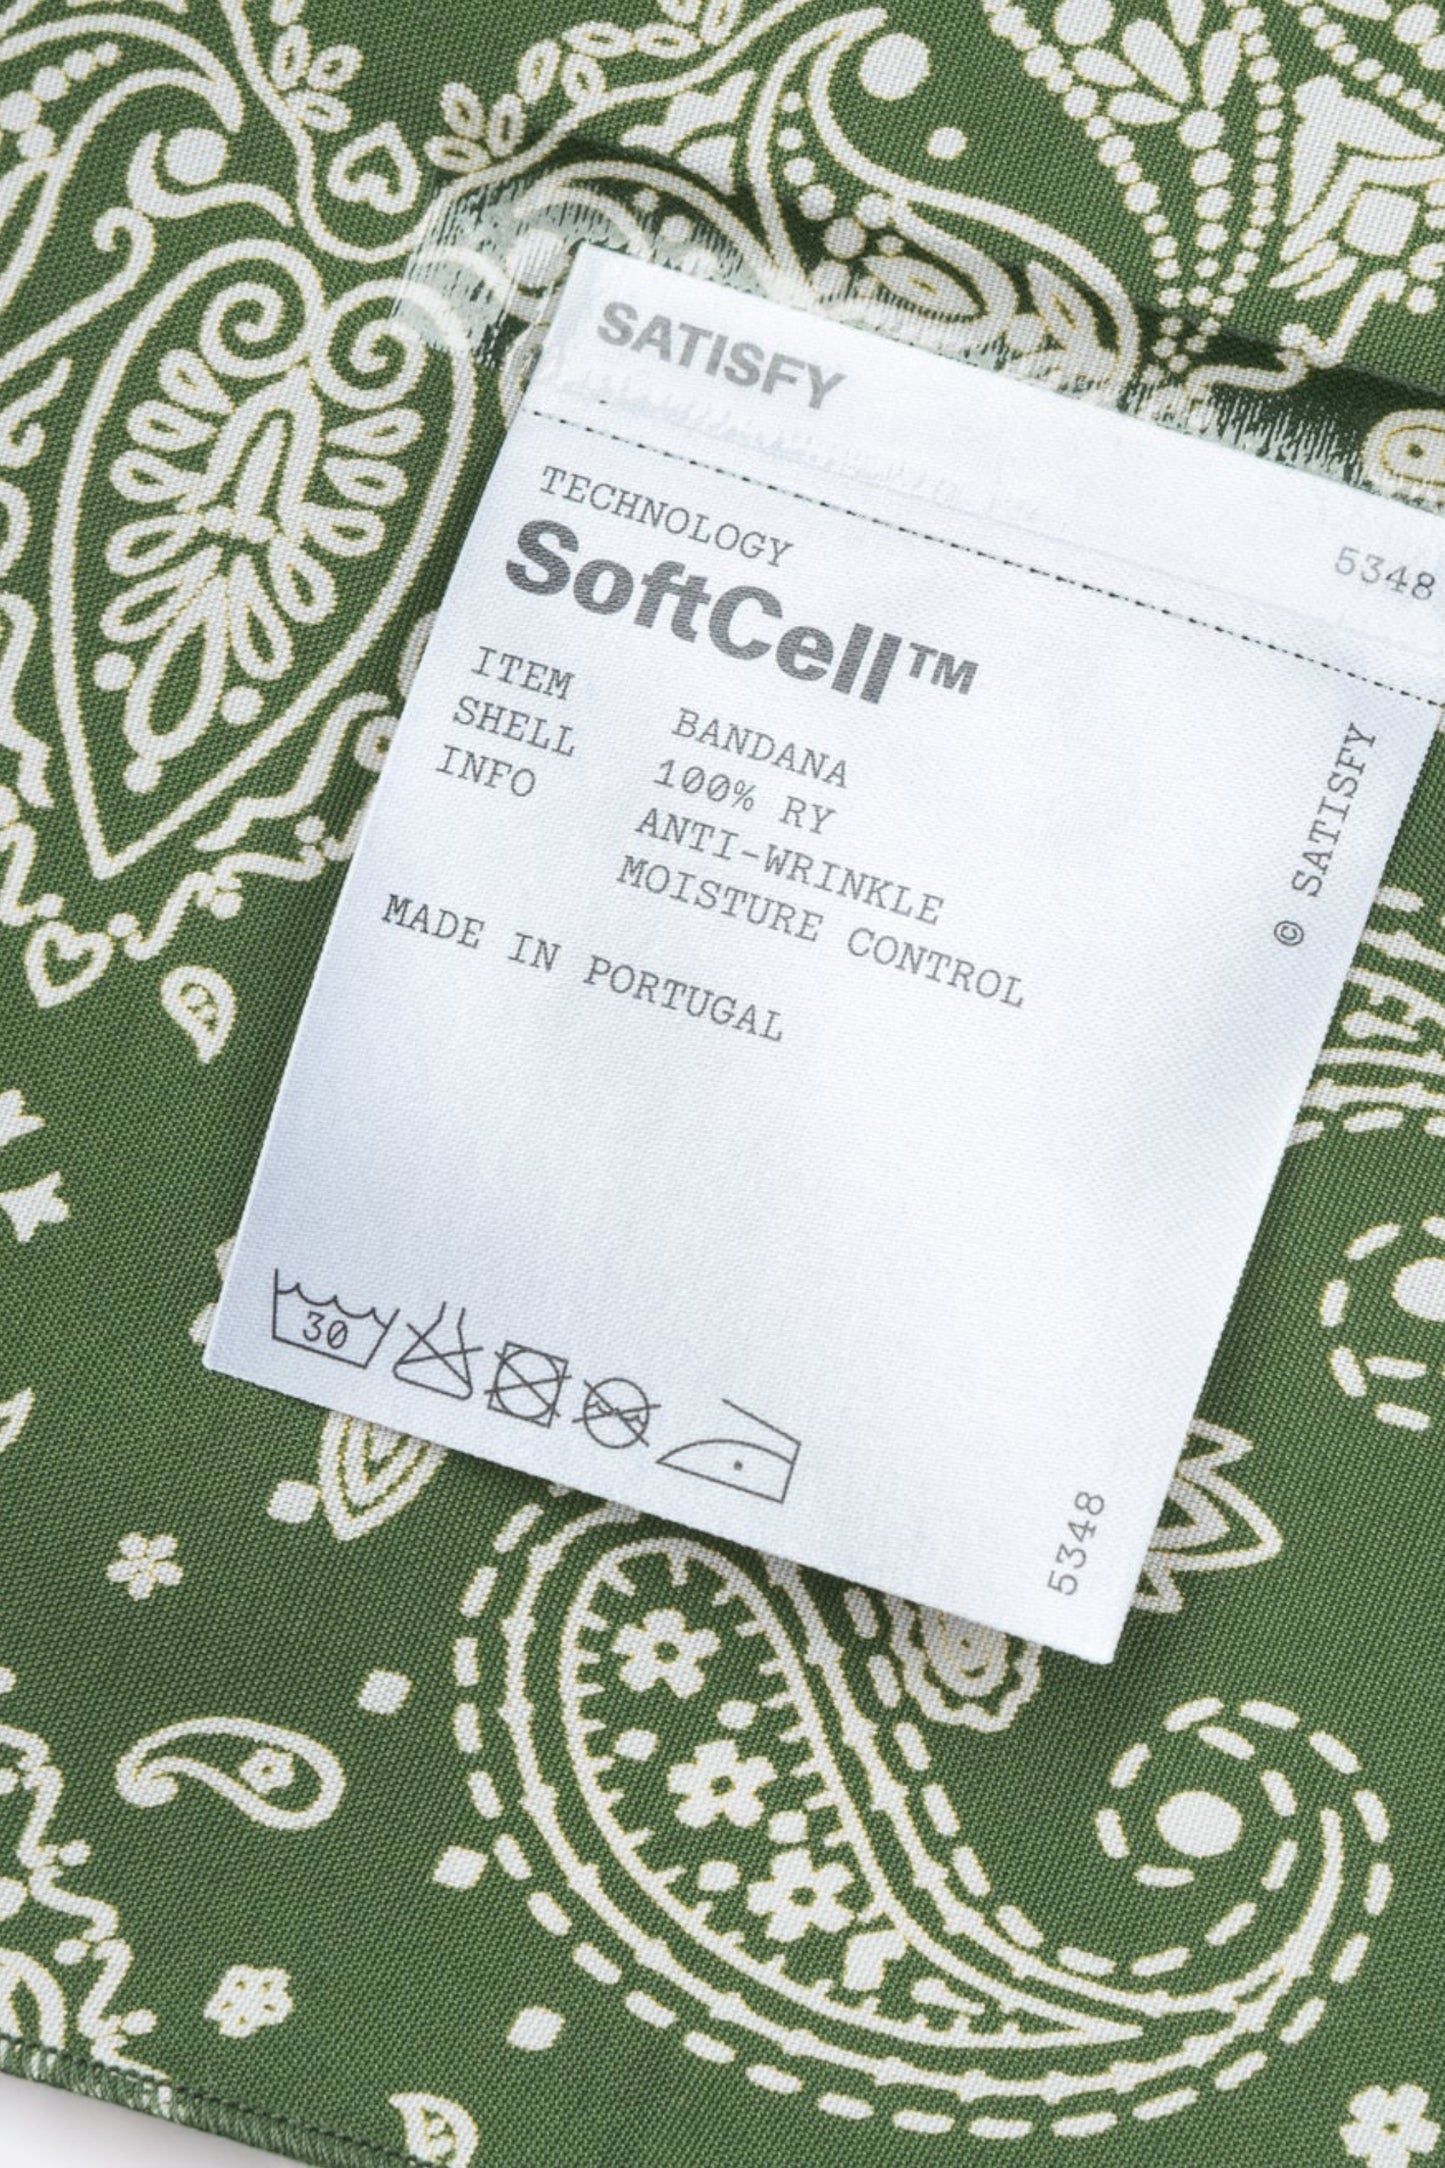 Satisfy - SoftCell™ Bandana (Green)